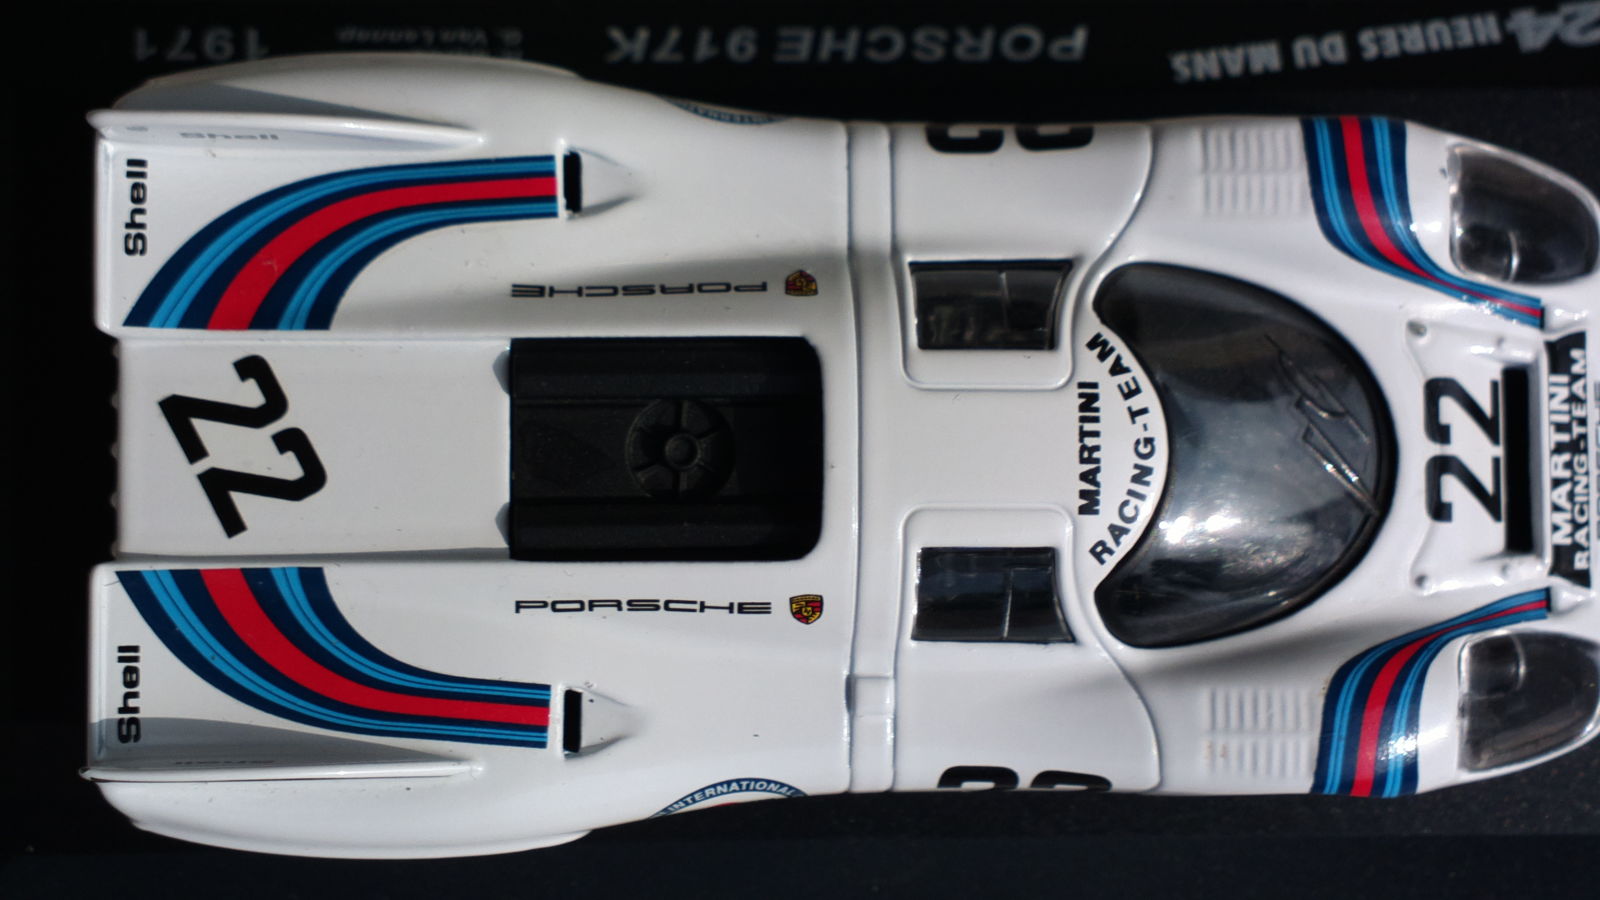 Illustration for article titled Concours dModella - Ixo Porsche 917K